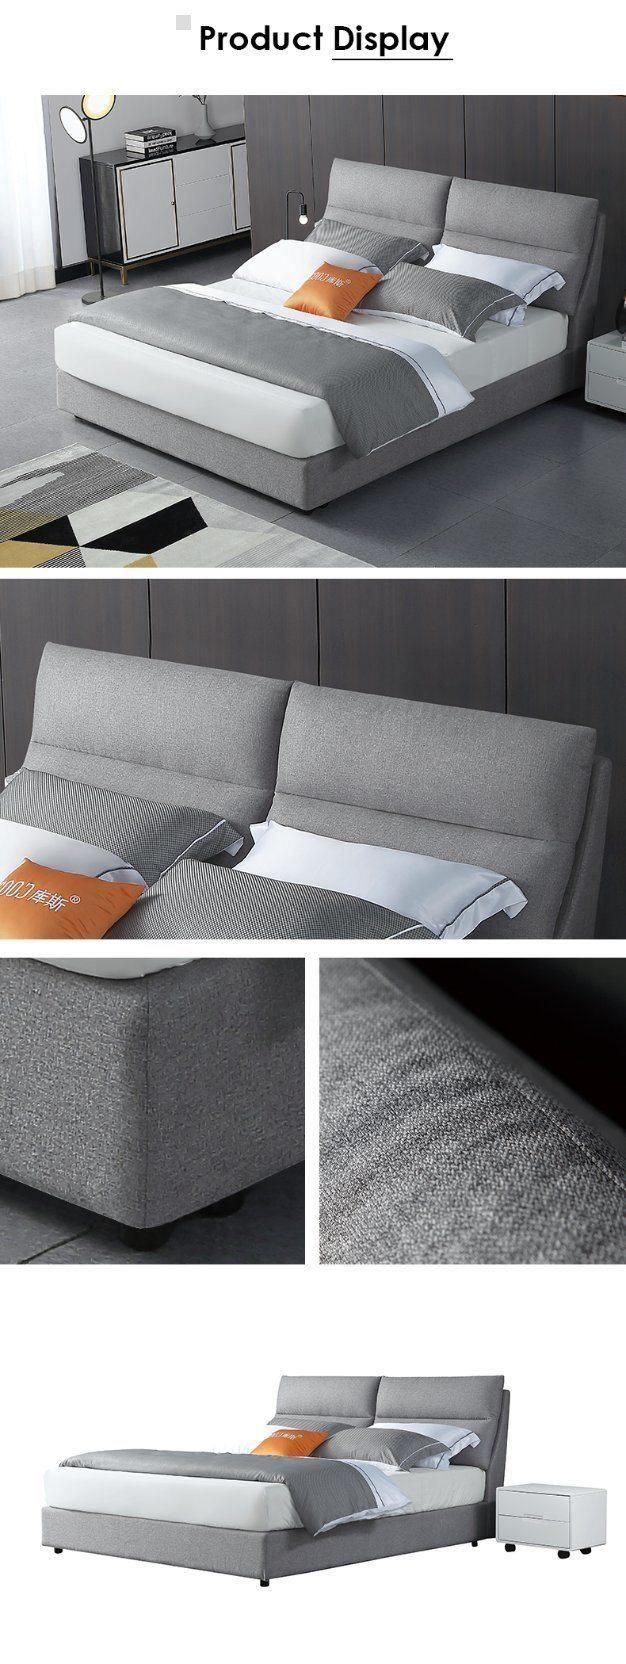 Minimalist Modern Bedroom Furniture Grey Fabric King Size Bed